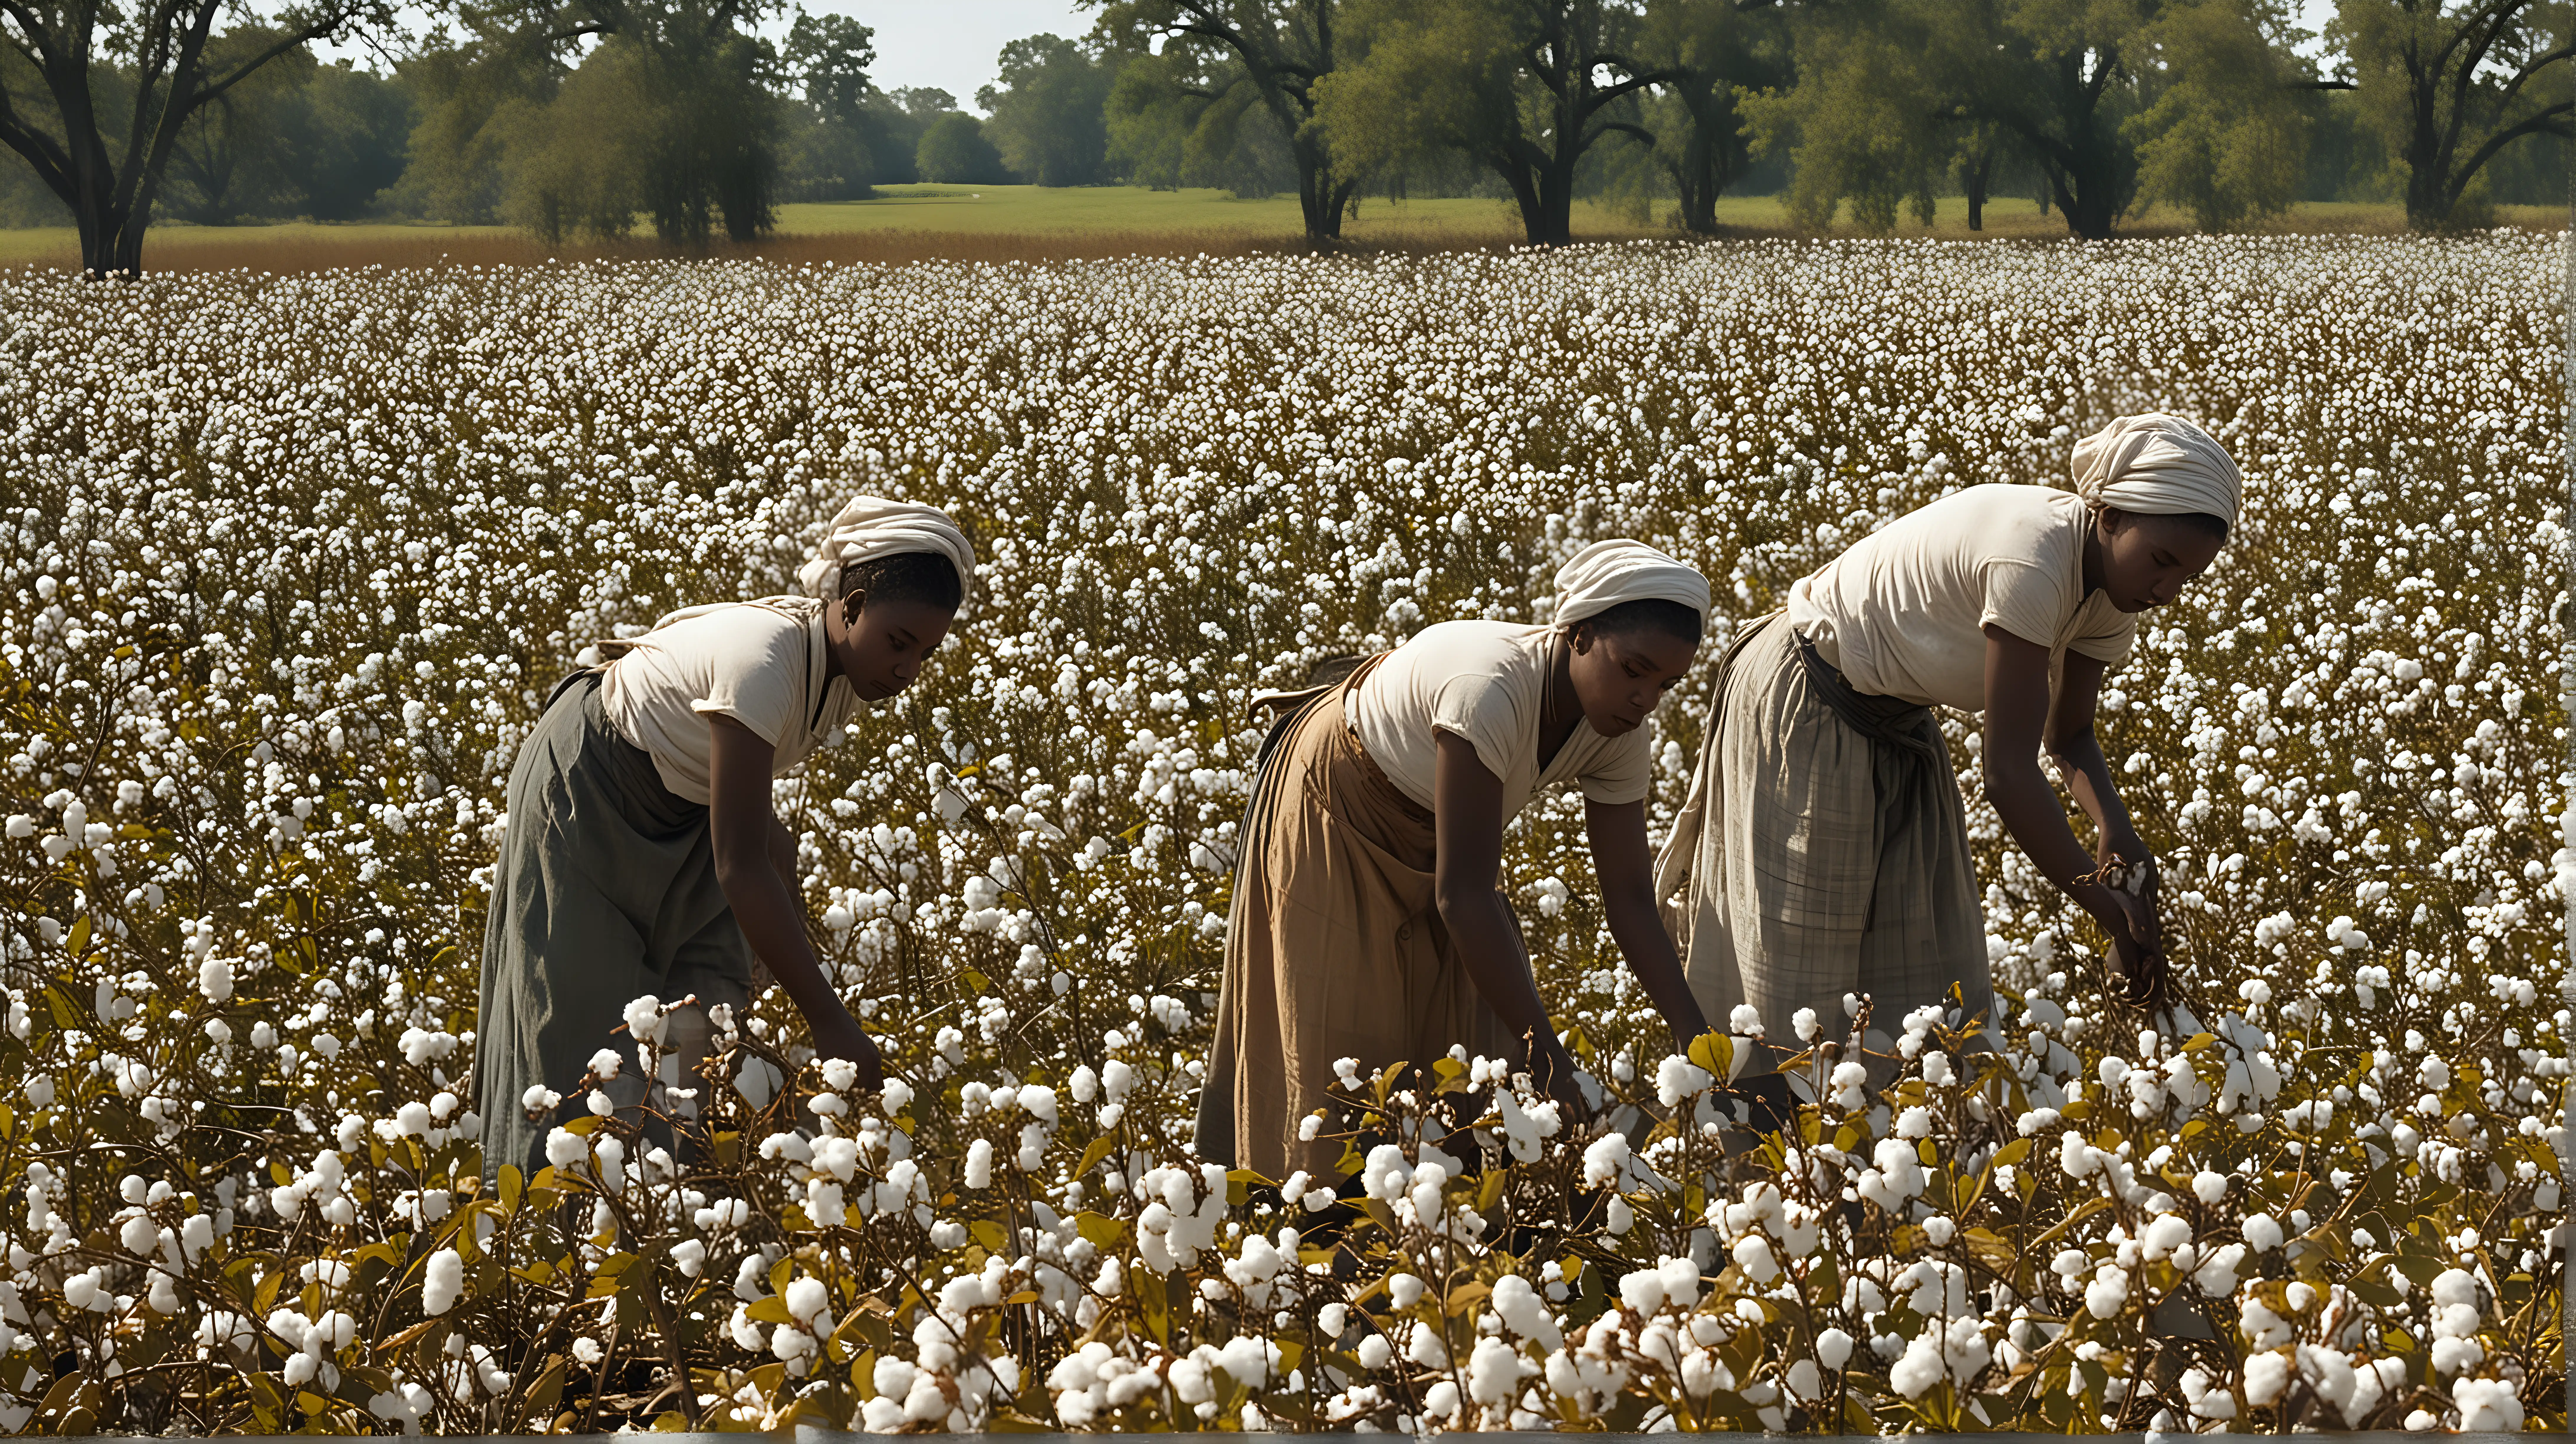 Historical Scene Cotton Picking Slaves in 19th Century Louisiana